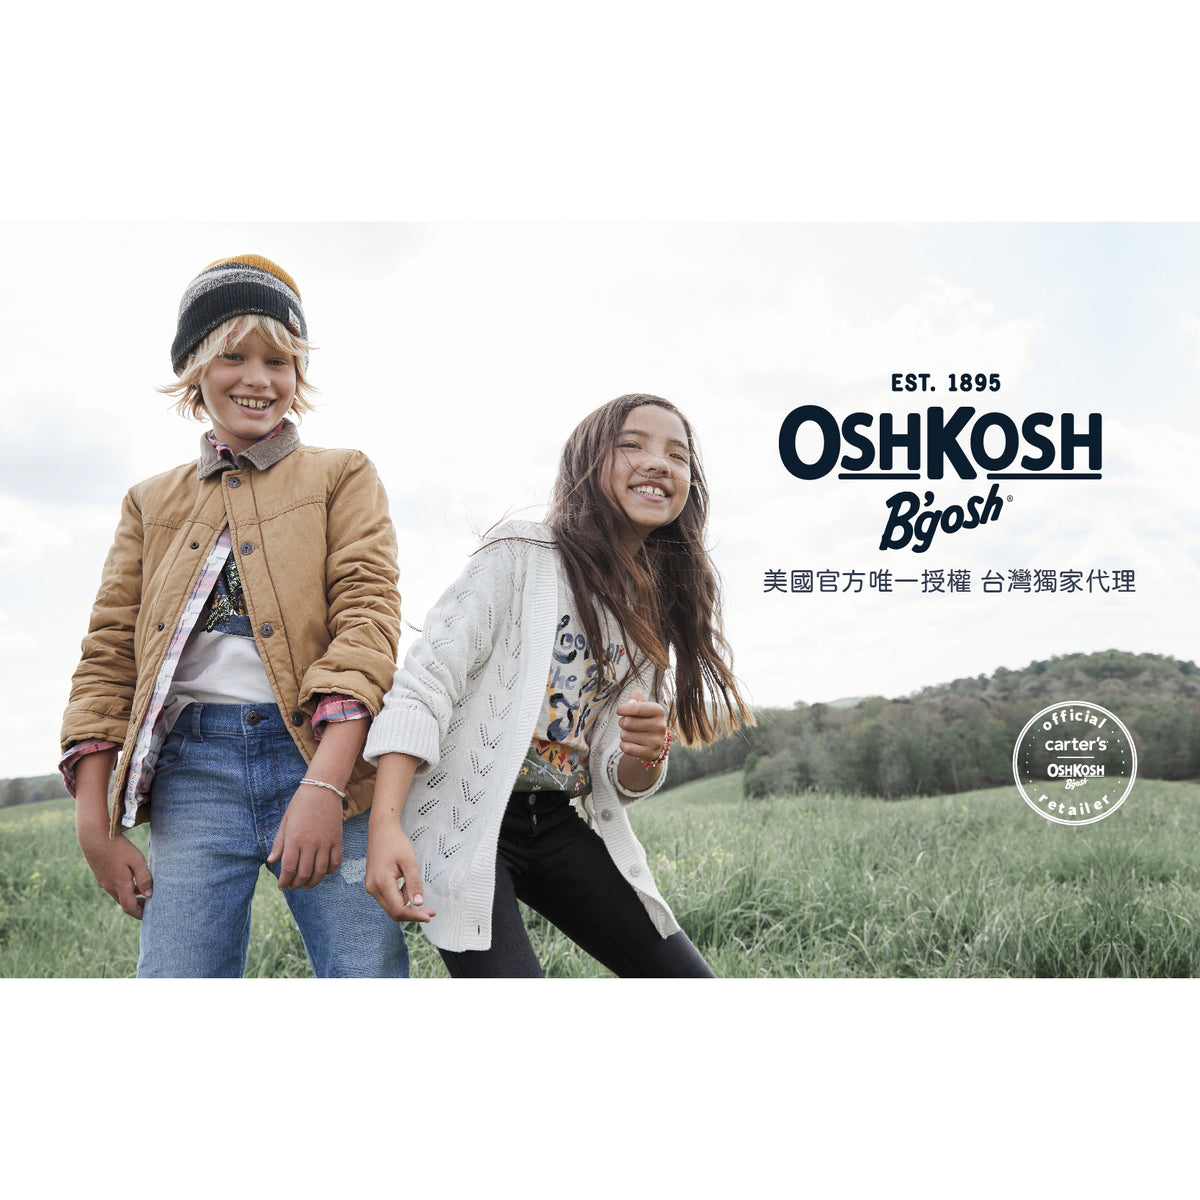 OshKosh blue and white classic shirt (4-7)